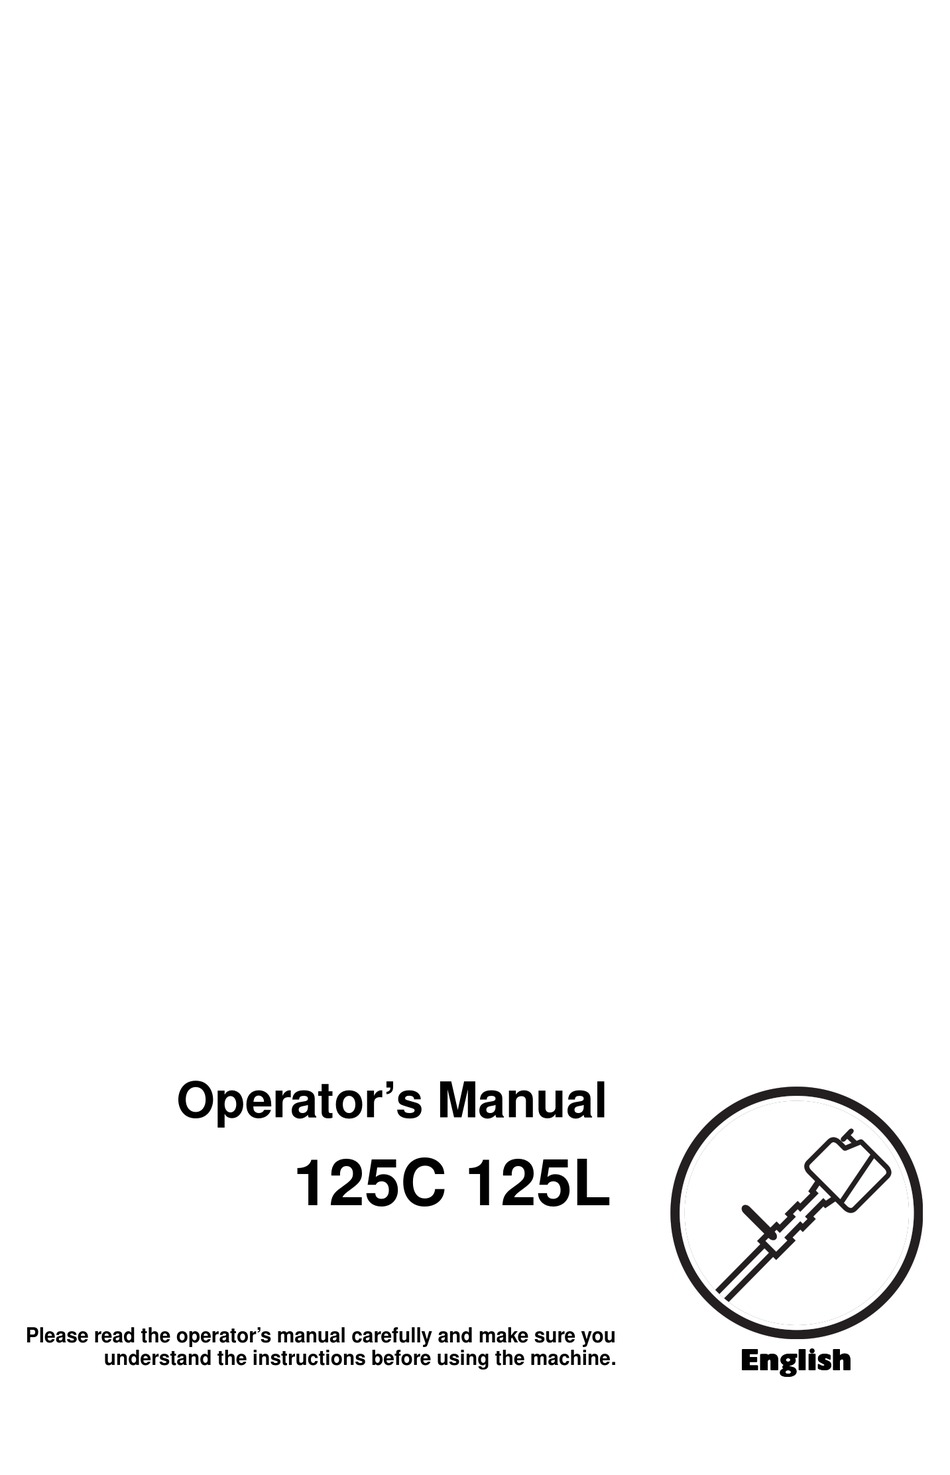 HUSQVARNA 125C OPERATOR'S MANUAL Download | ManualsLib